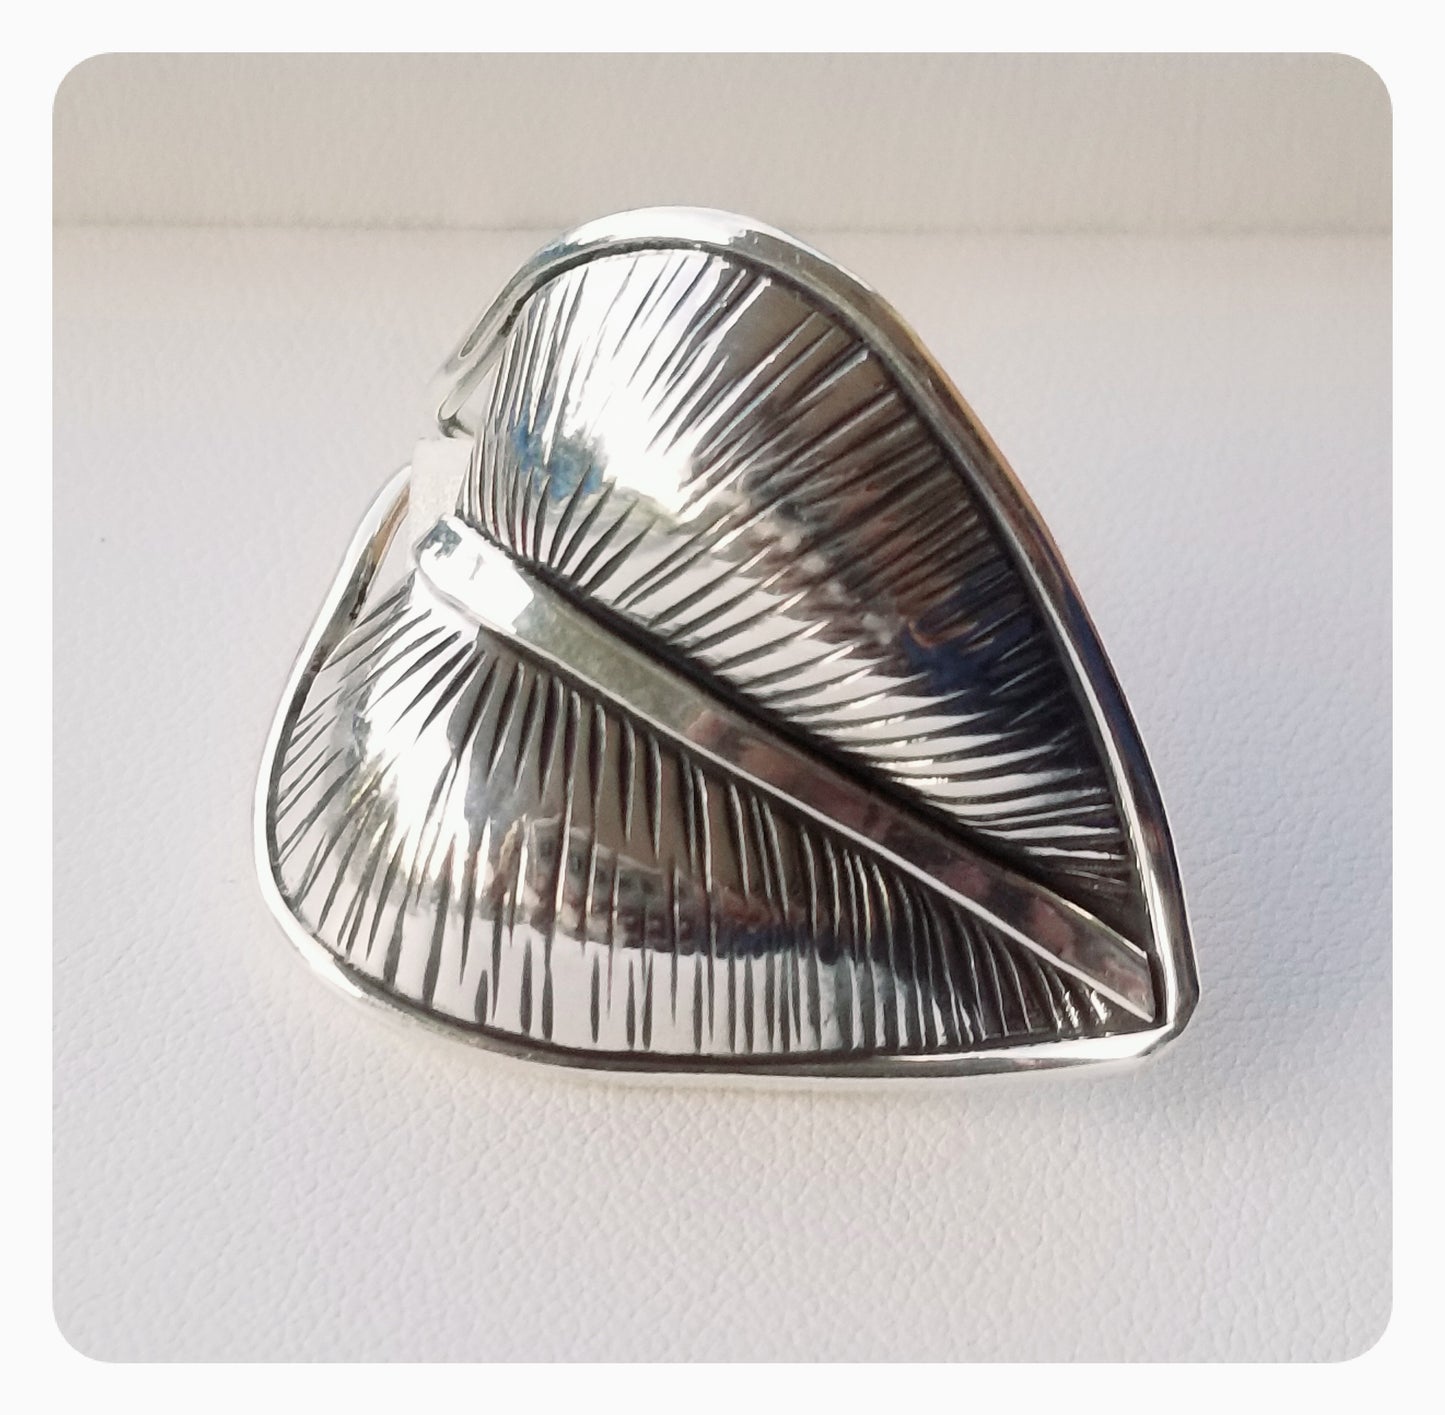 Sterling Silver HandMade Natura Ring